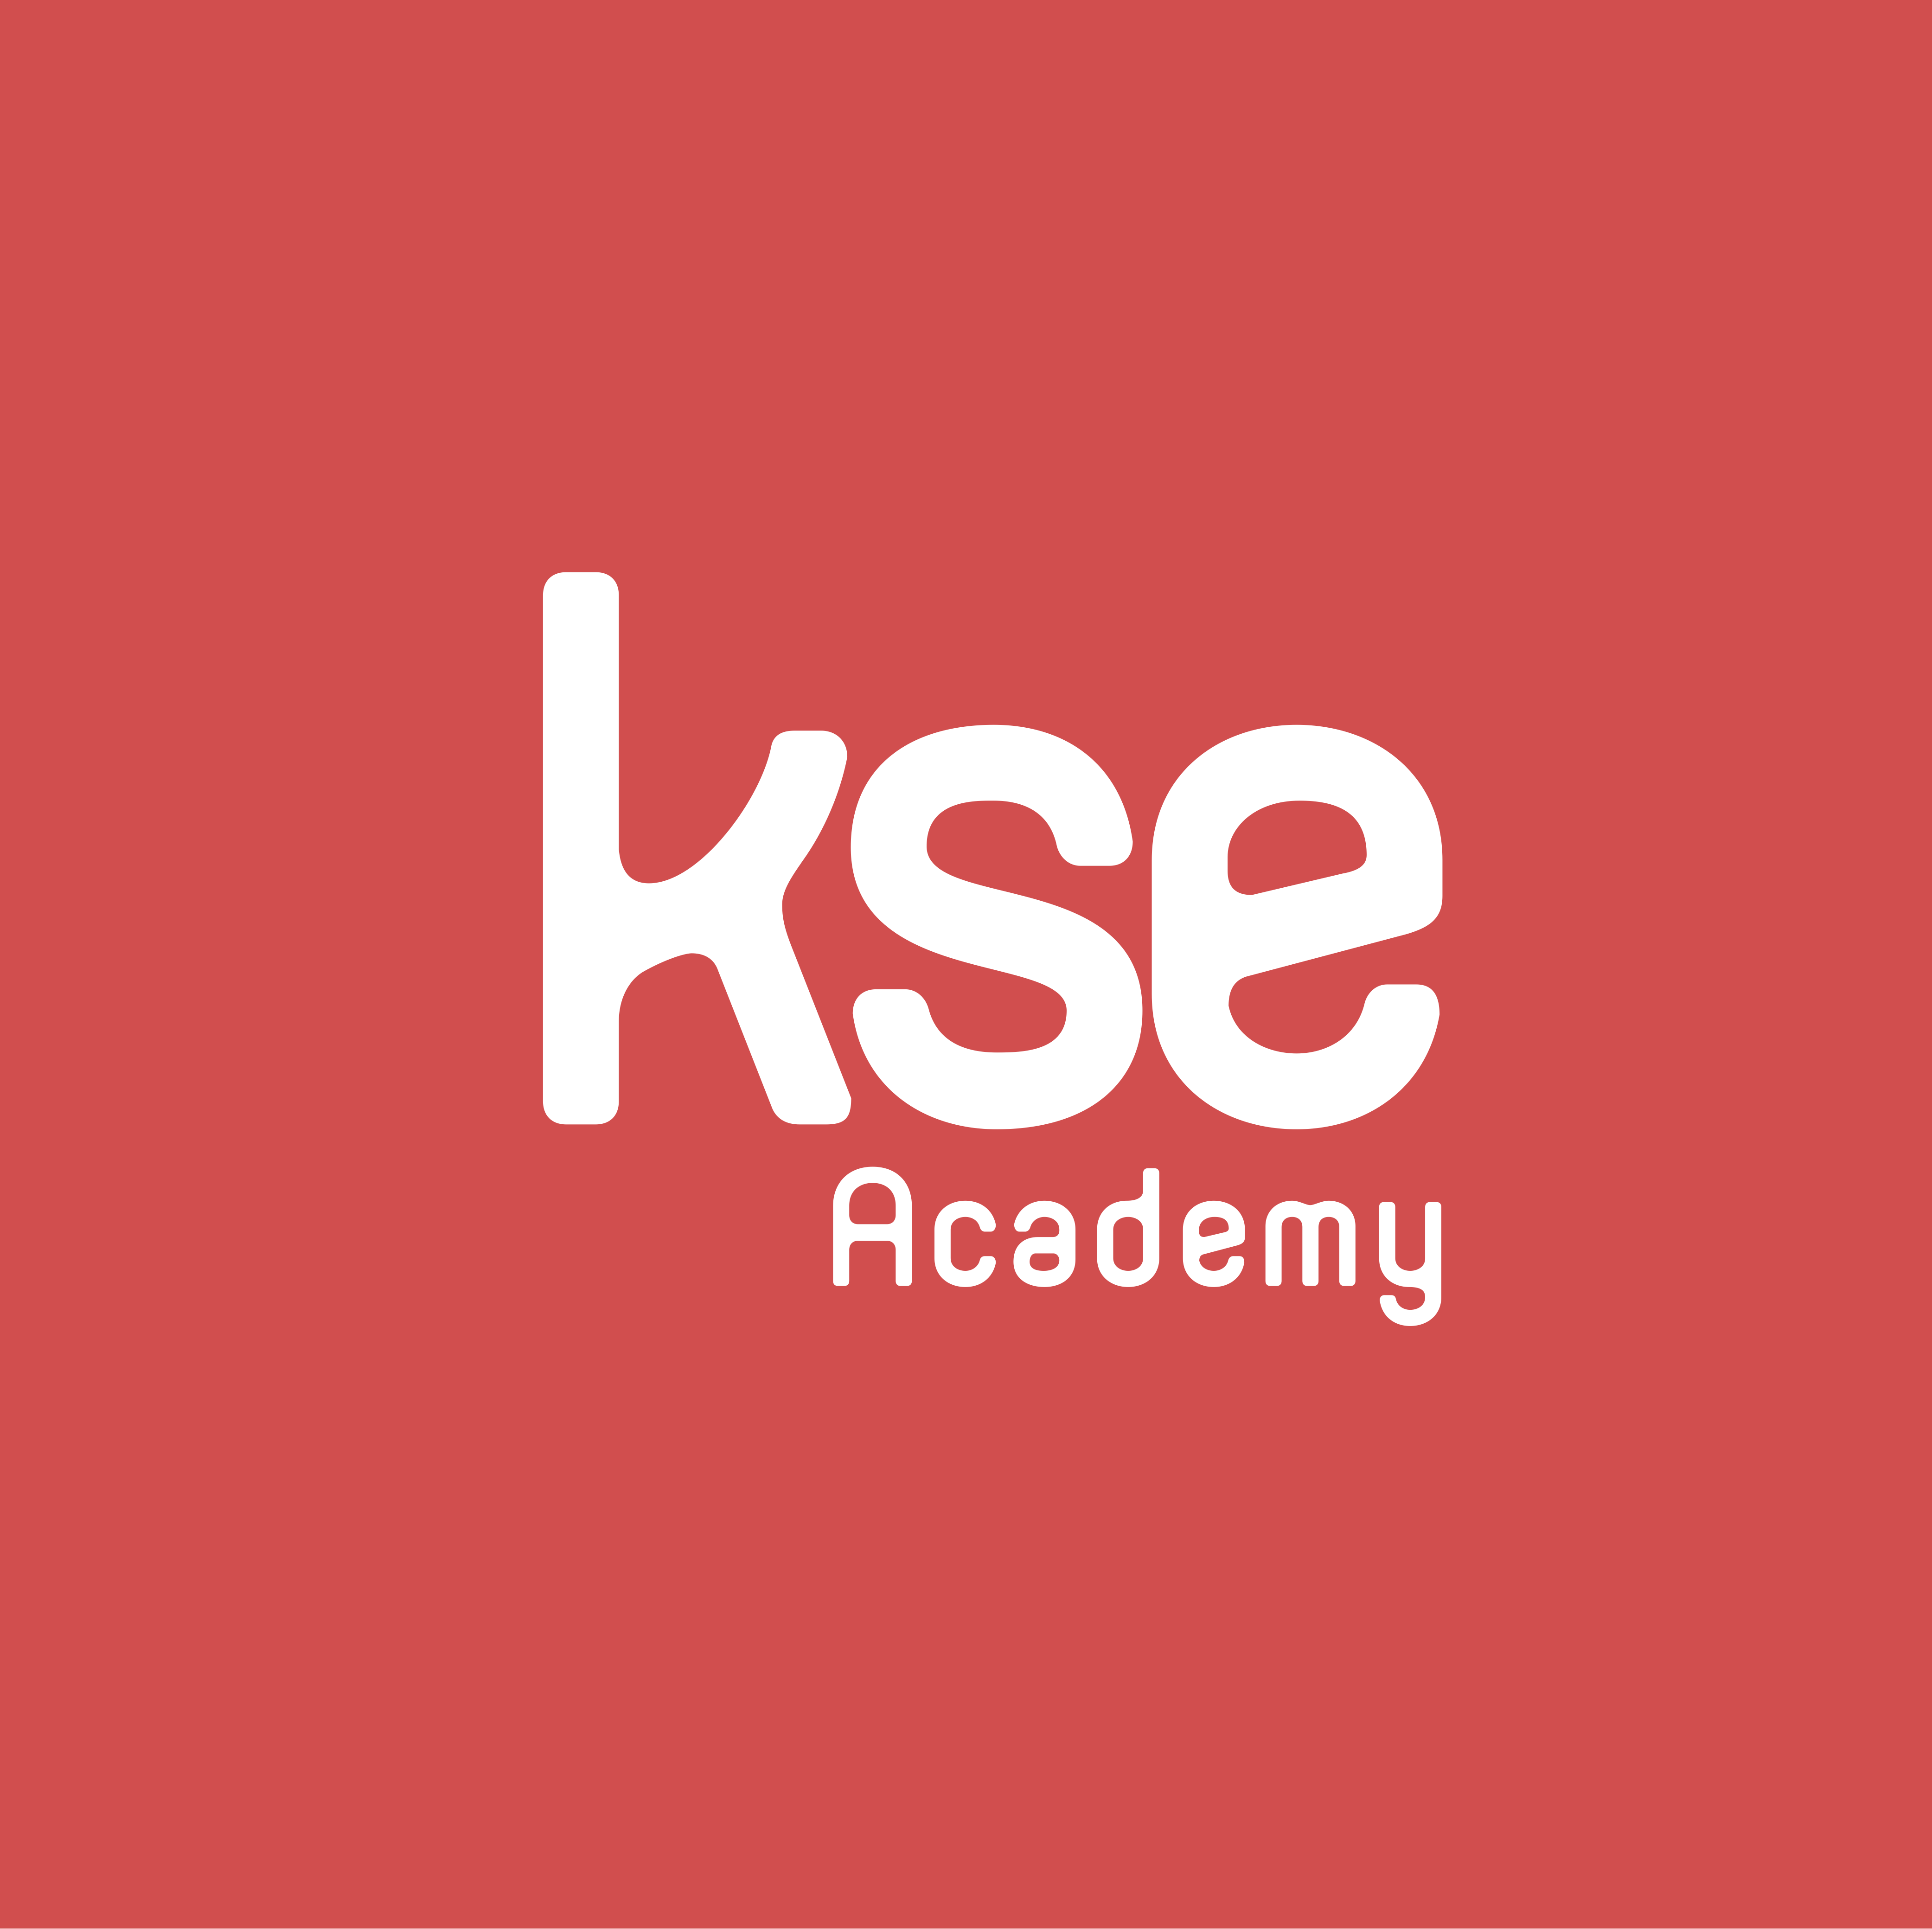 KSE Academy